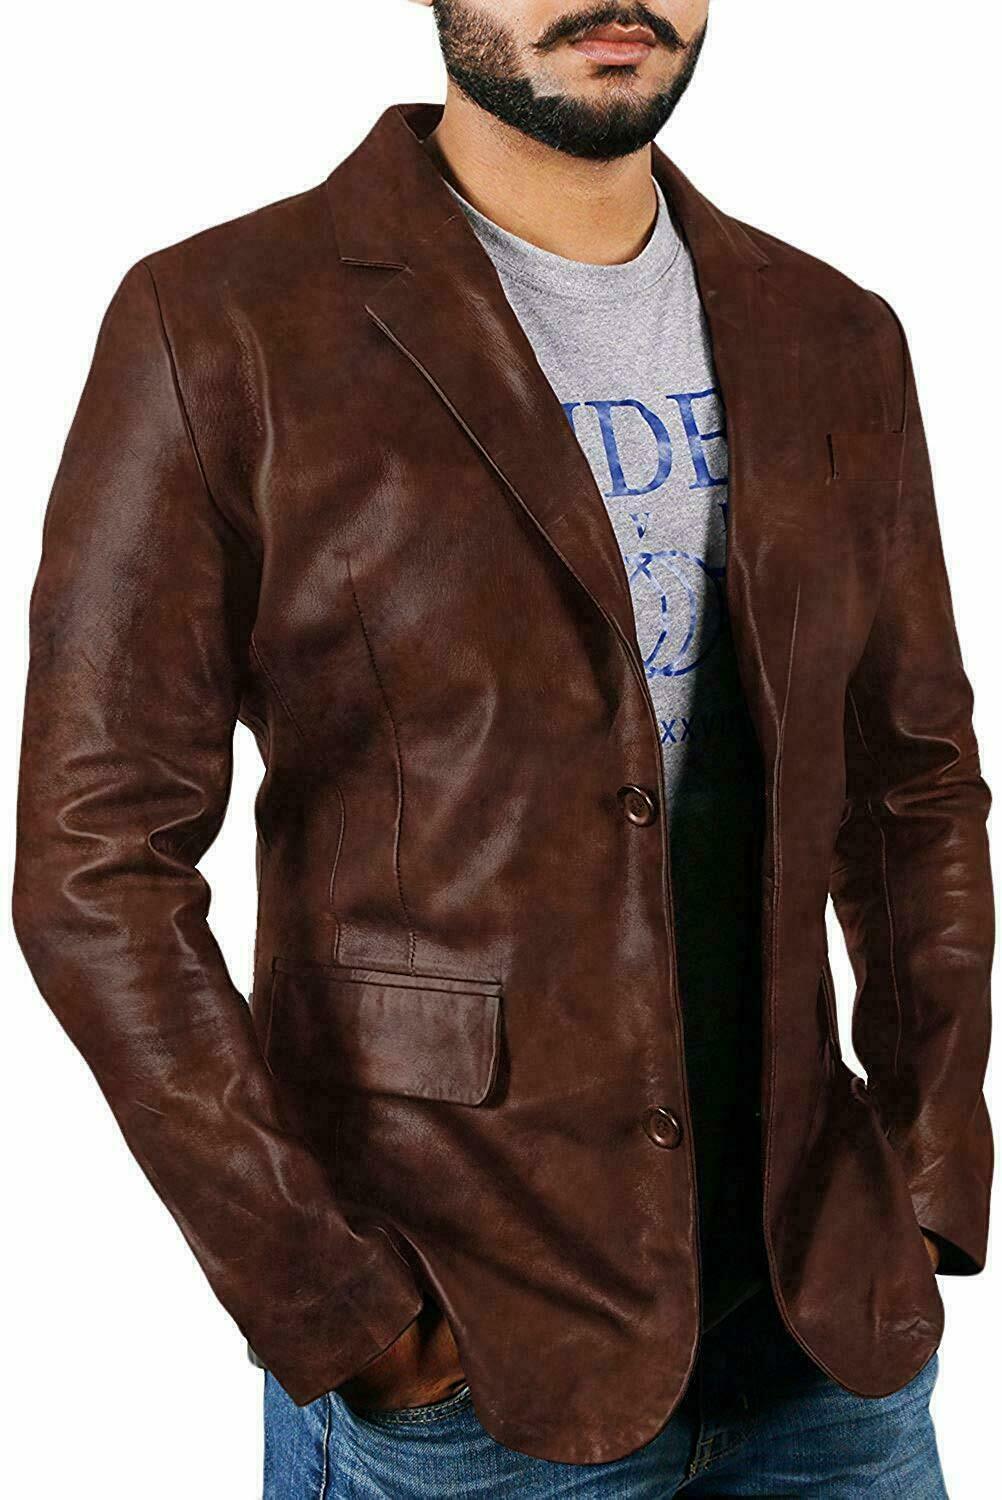 Men's Lambskin Leather Blazer Distressed Brown Slim fit Two Button Jacket Coat